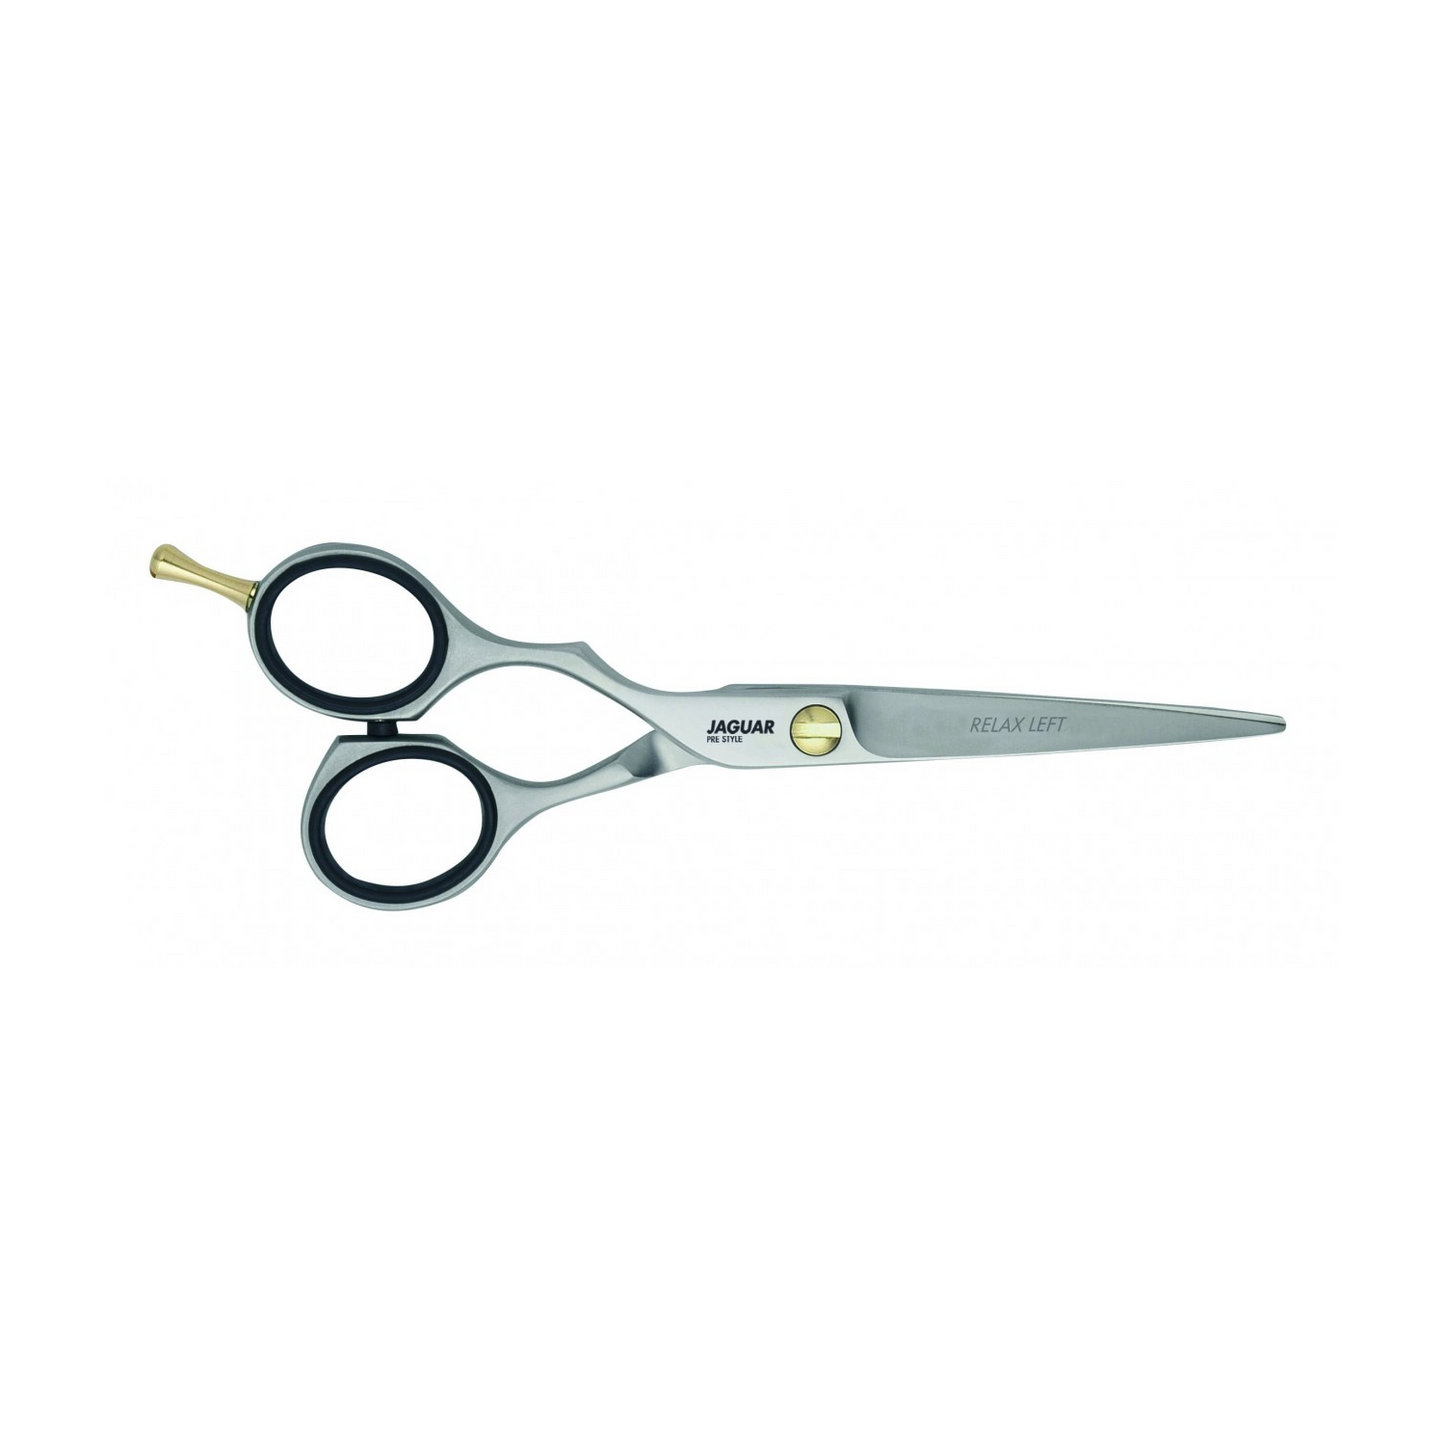 Jaguar 5.25" Relax Leftie Hairdressing Scissors (SHOP)